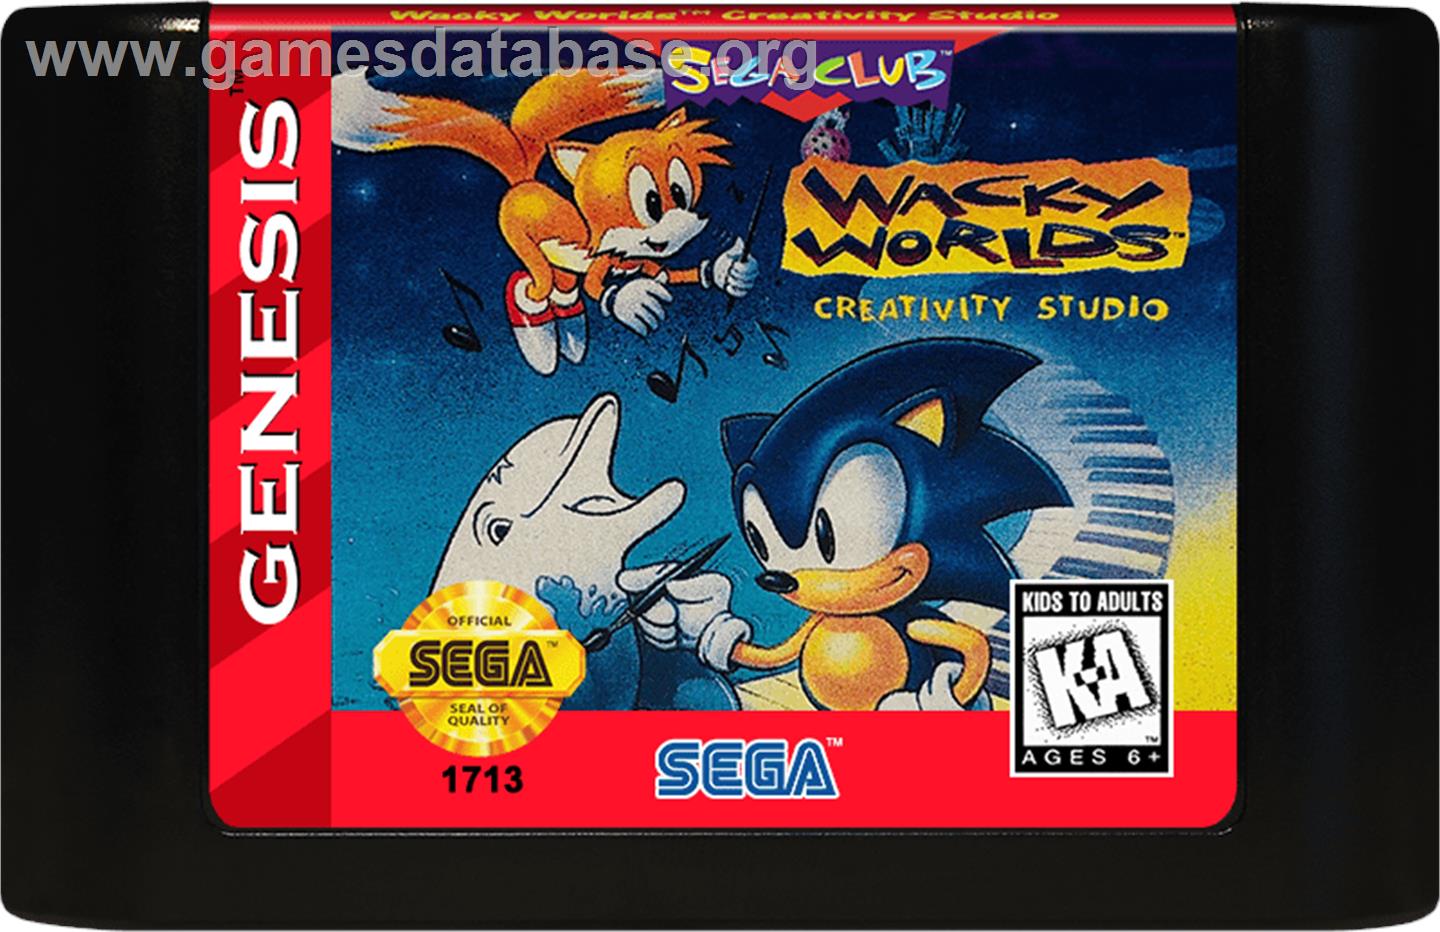 Wacky Worlds Creativity Studio - Sega Genesis - Artwork - Cartridge